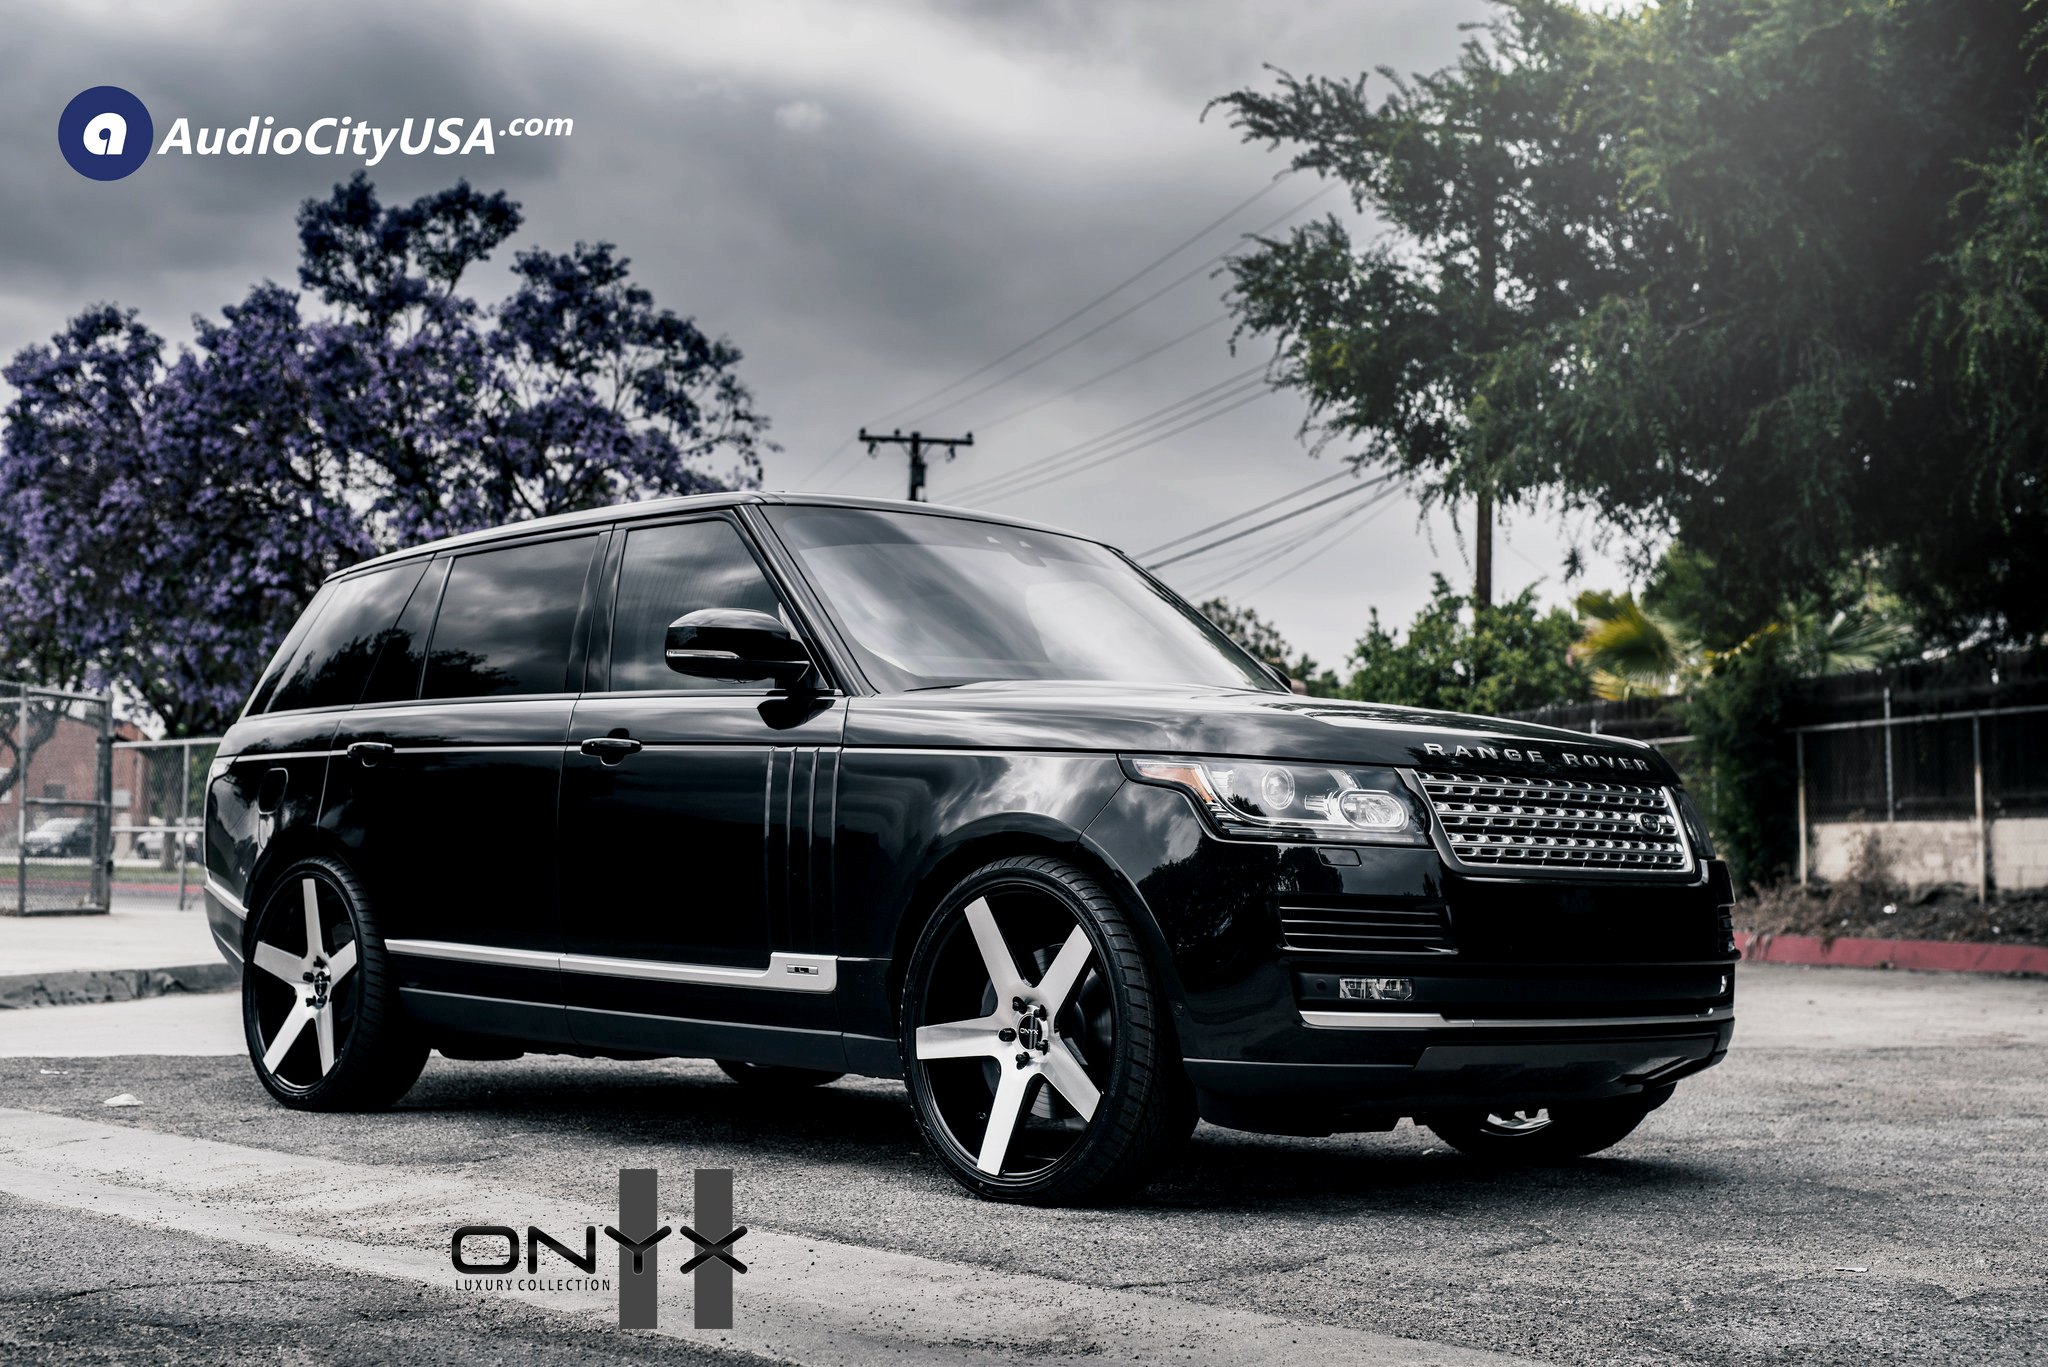 Black Range Rover with Chrome Onyx Wheels - Photo by Rennen International